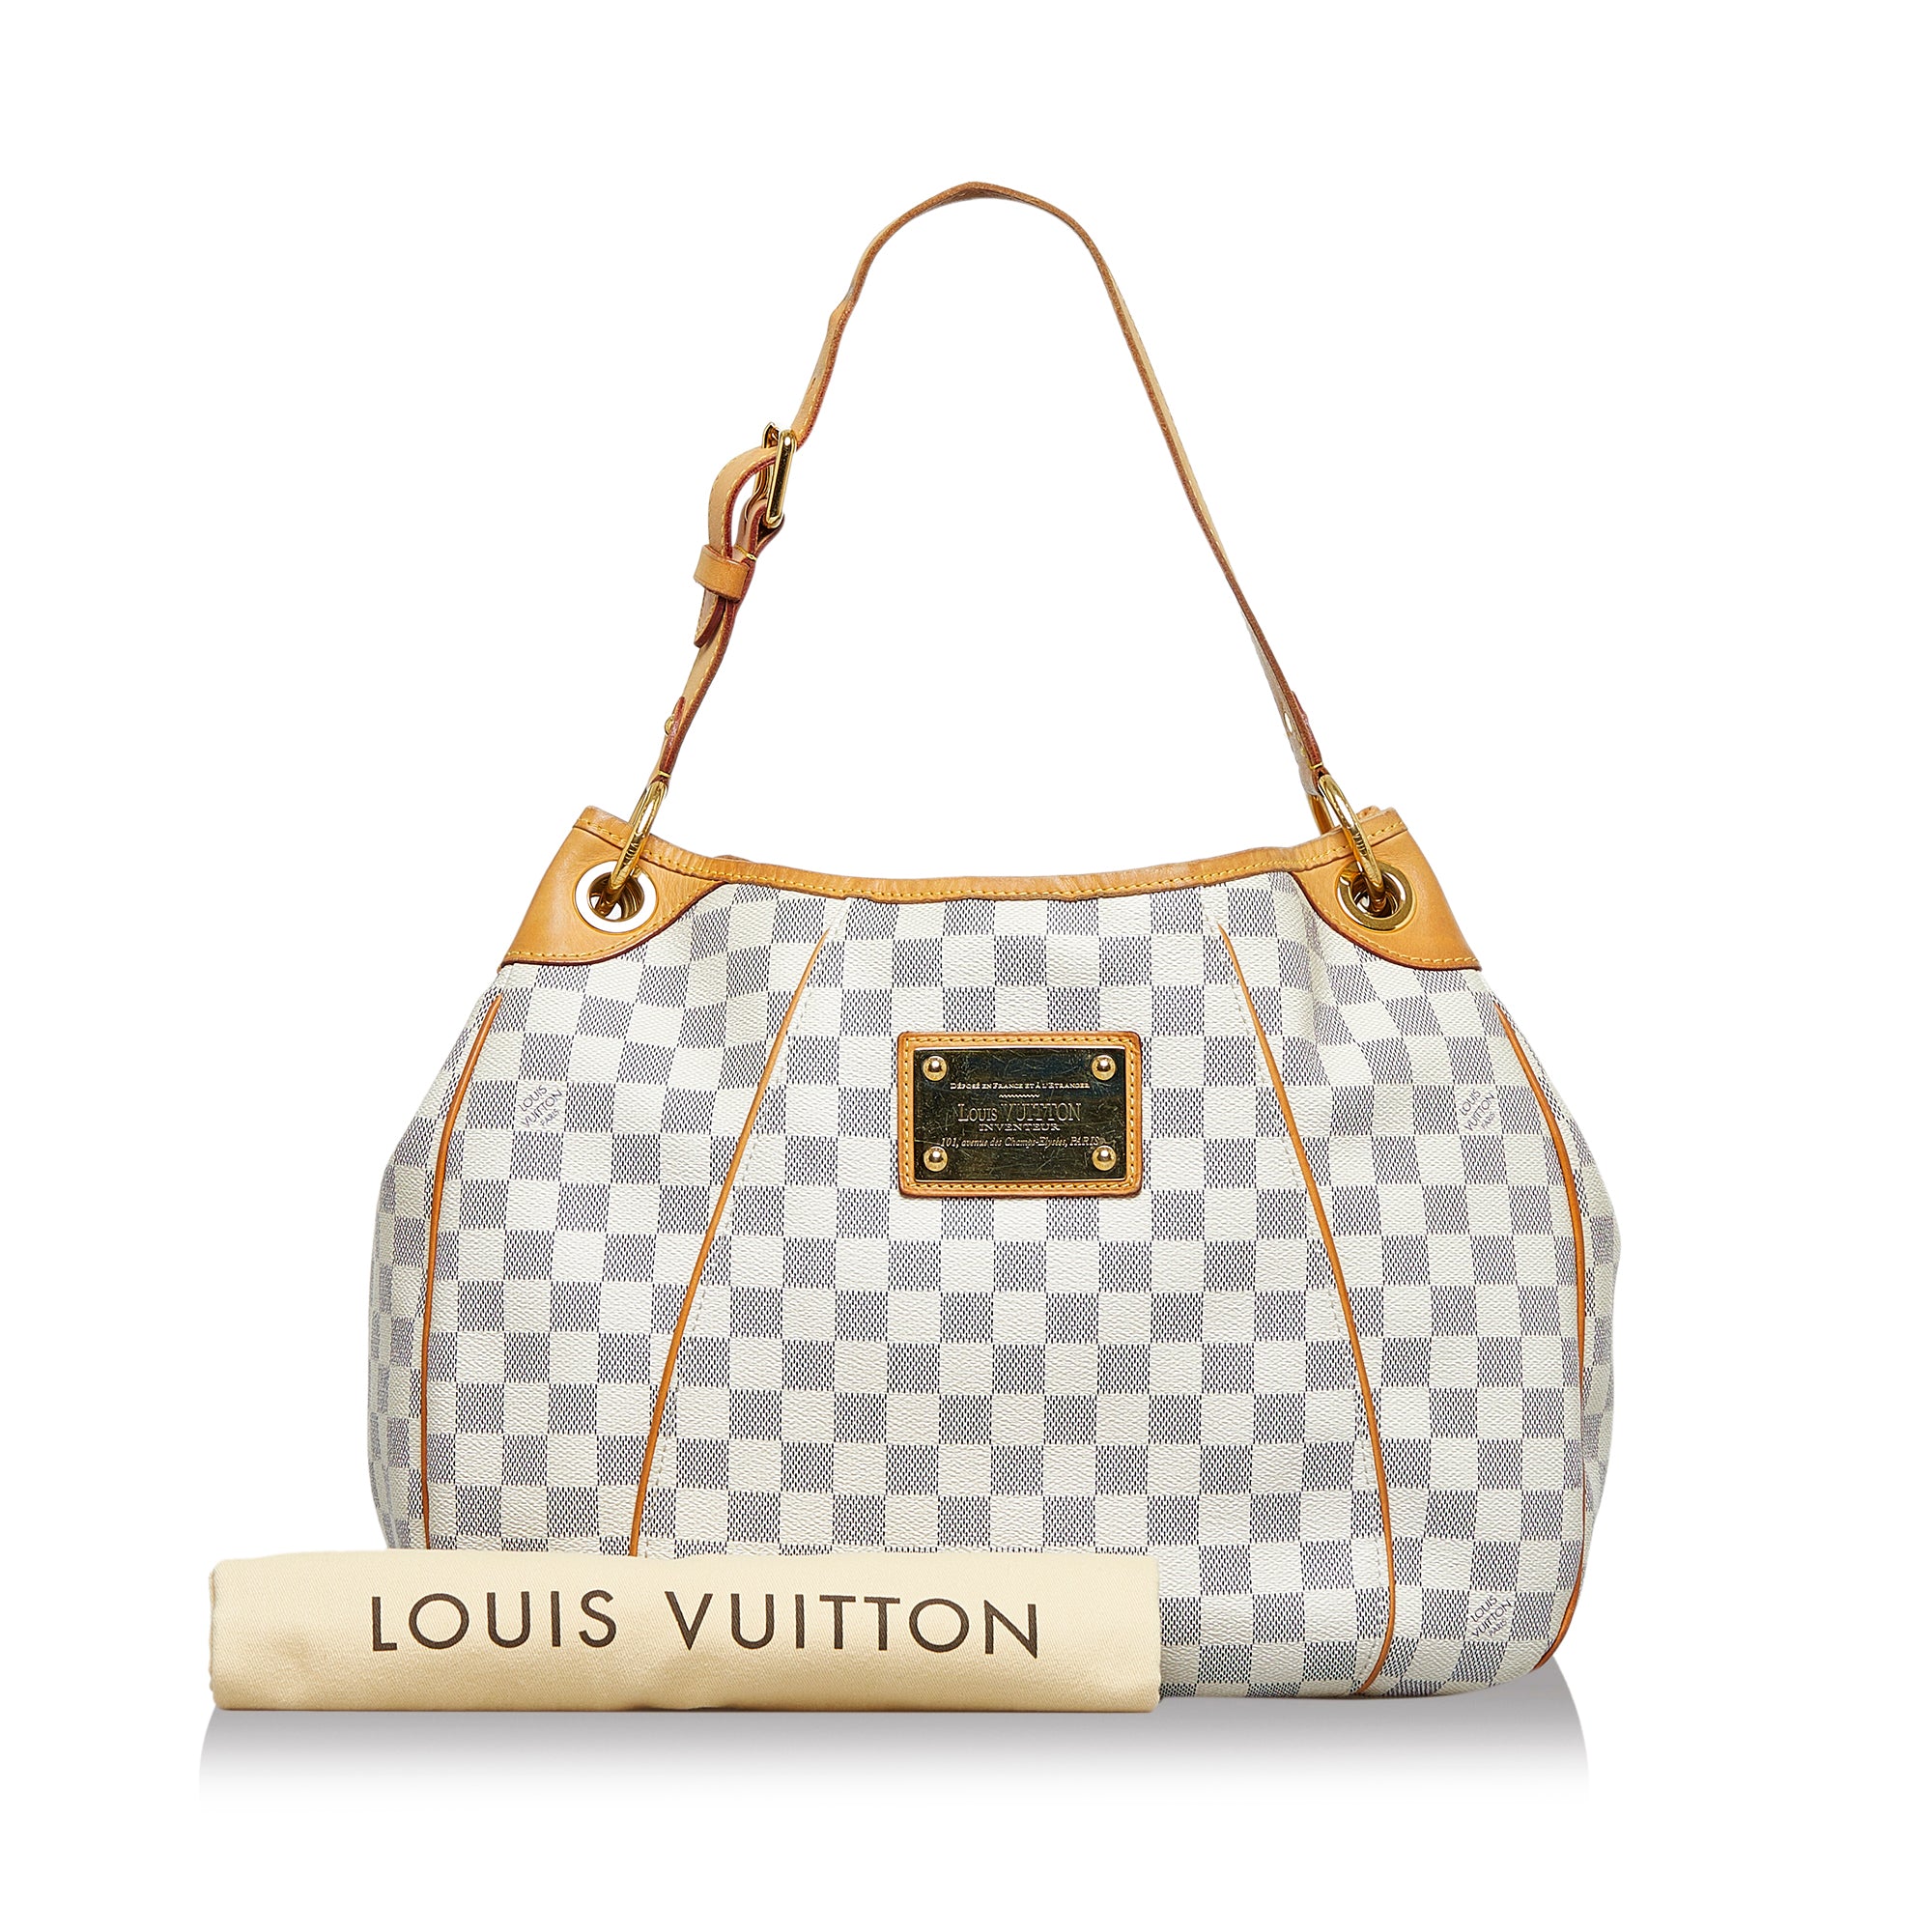 Louis Vuitton Galliera PM Damier Bag with shoulder strap.